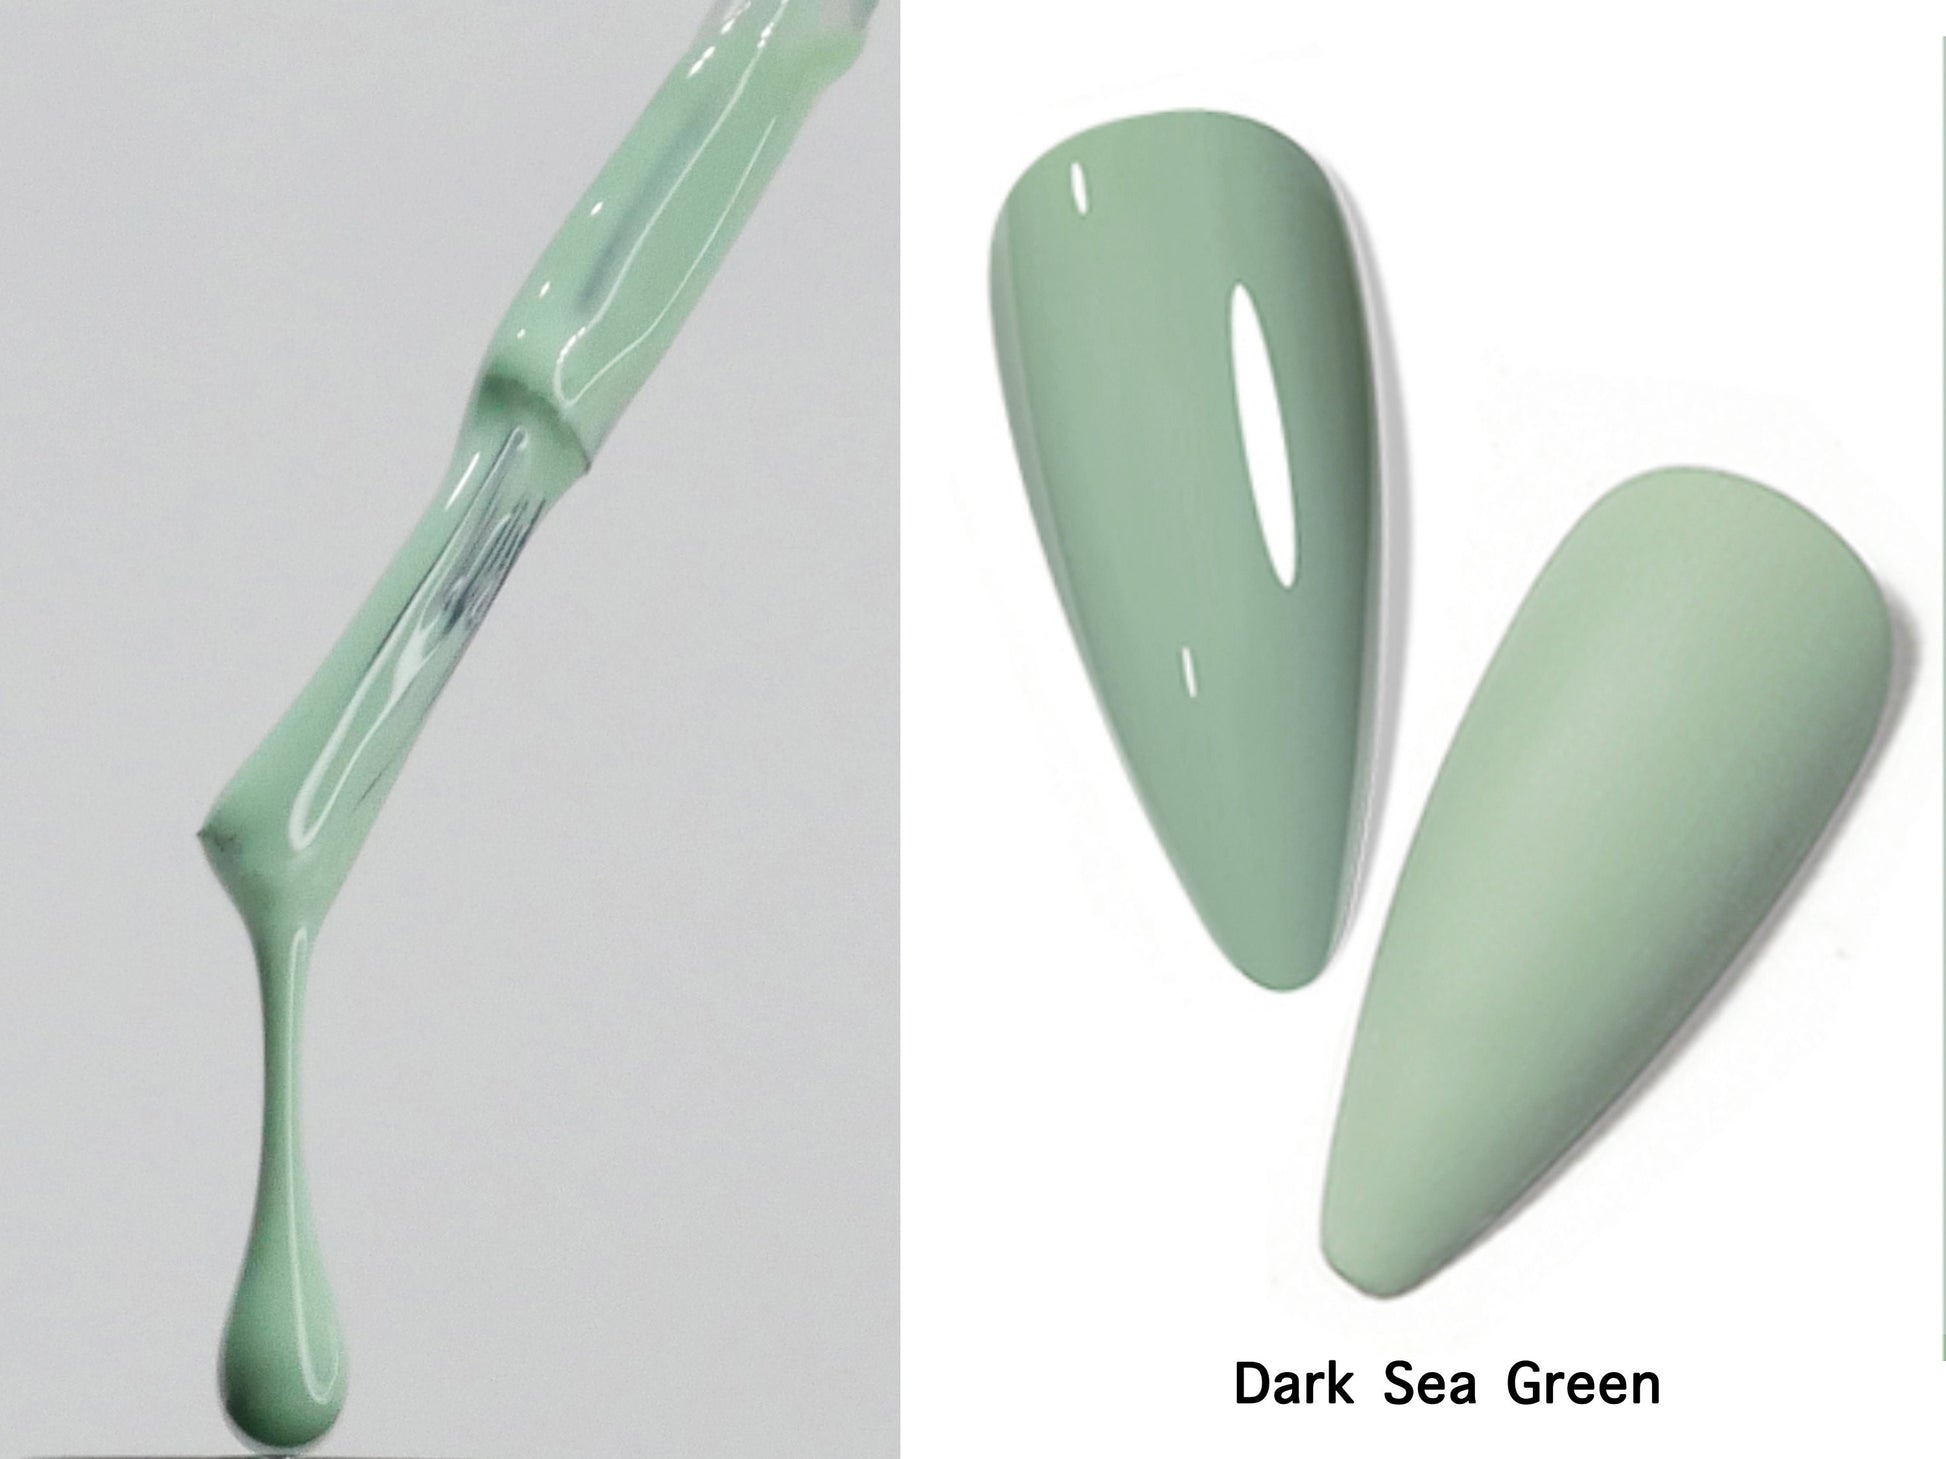 15ml Dark Sea Green Gel polish/ Creamy Mint Pistachio Solid color Nails/ Aquamarine Soak off UV/Led Gel polish Manicure Pedicure